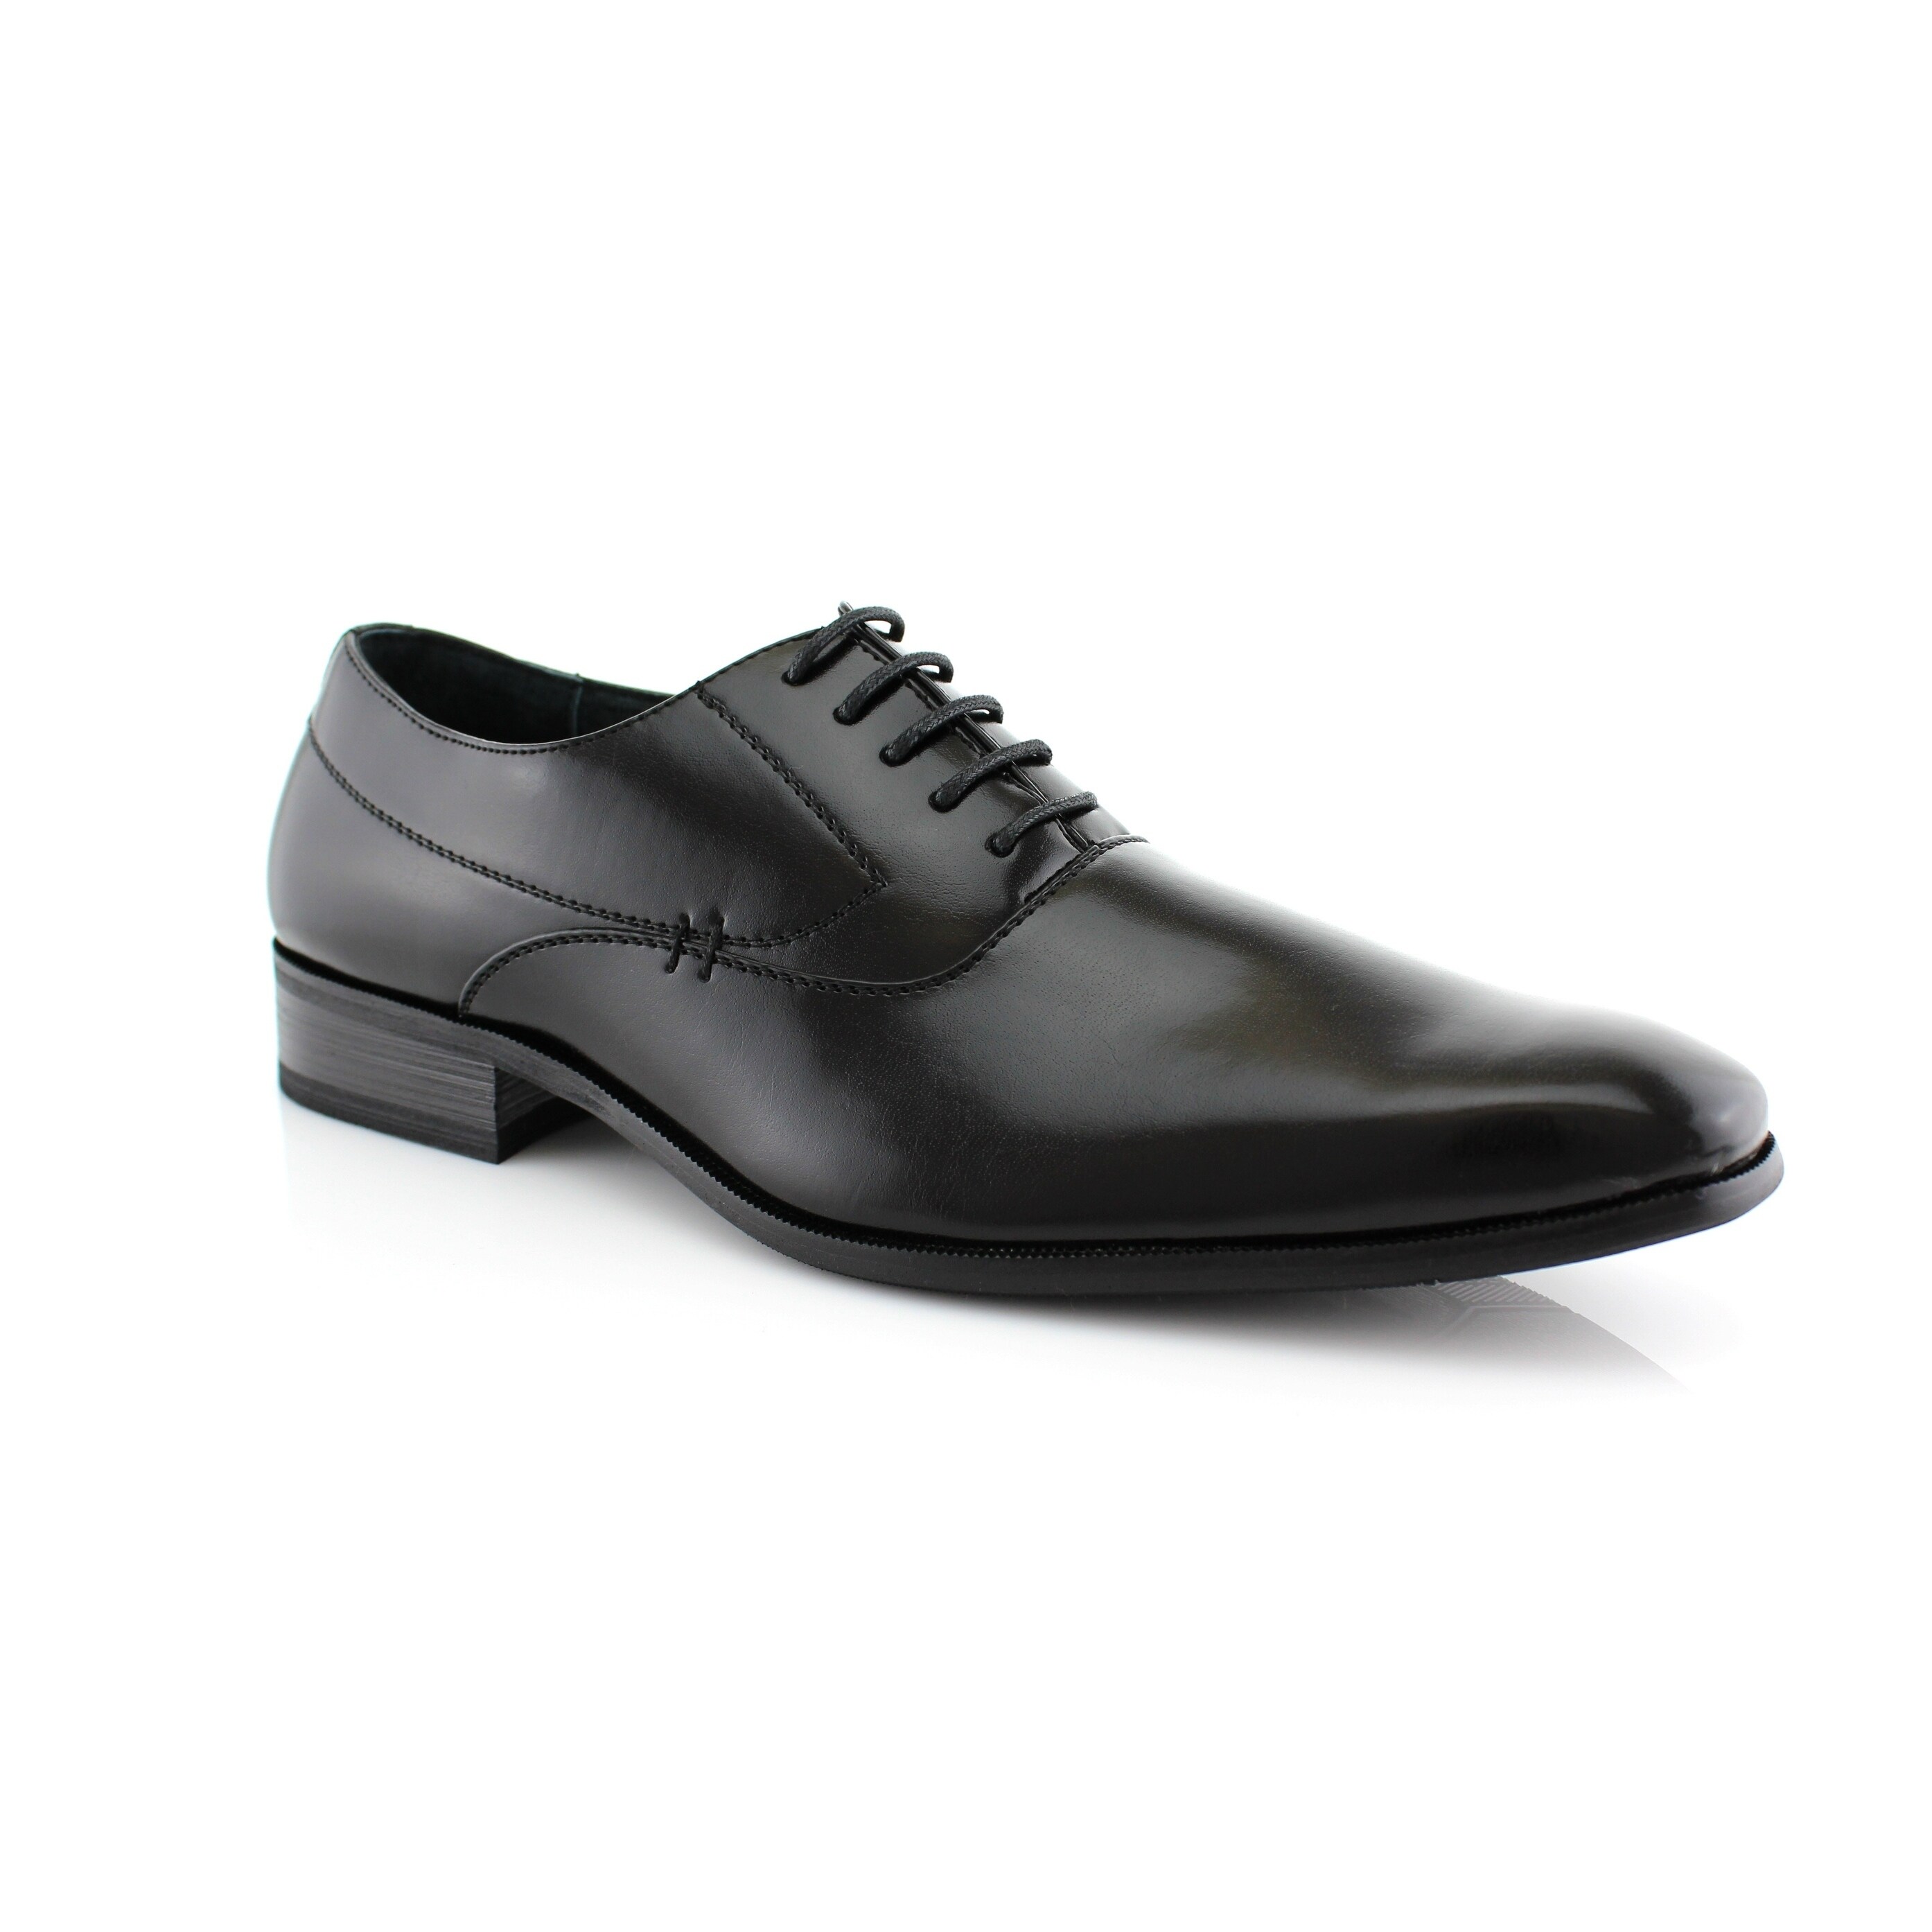 aldo men's formal shoes